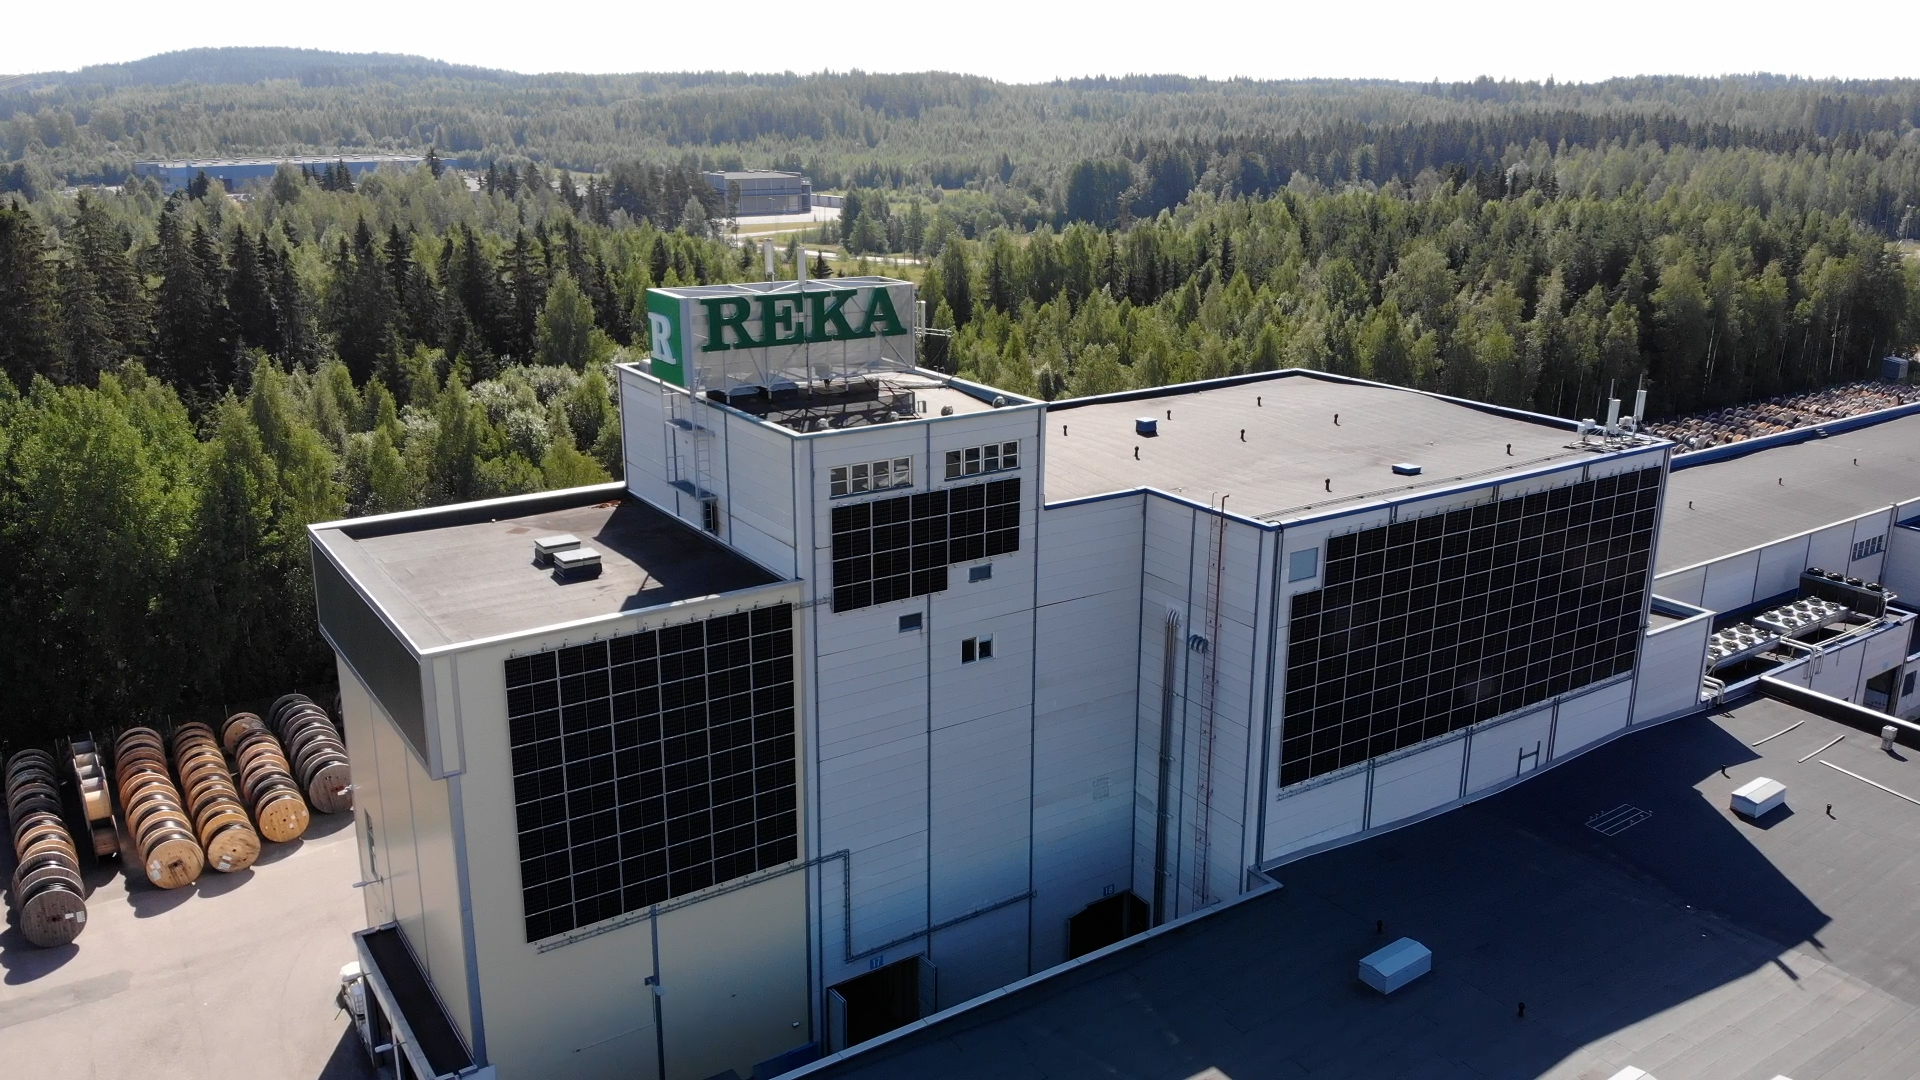 Reka Cables production plant in Riihimäki Finland